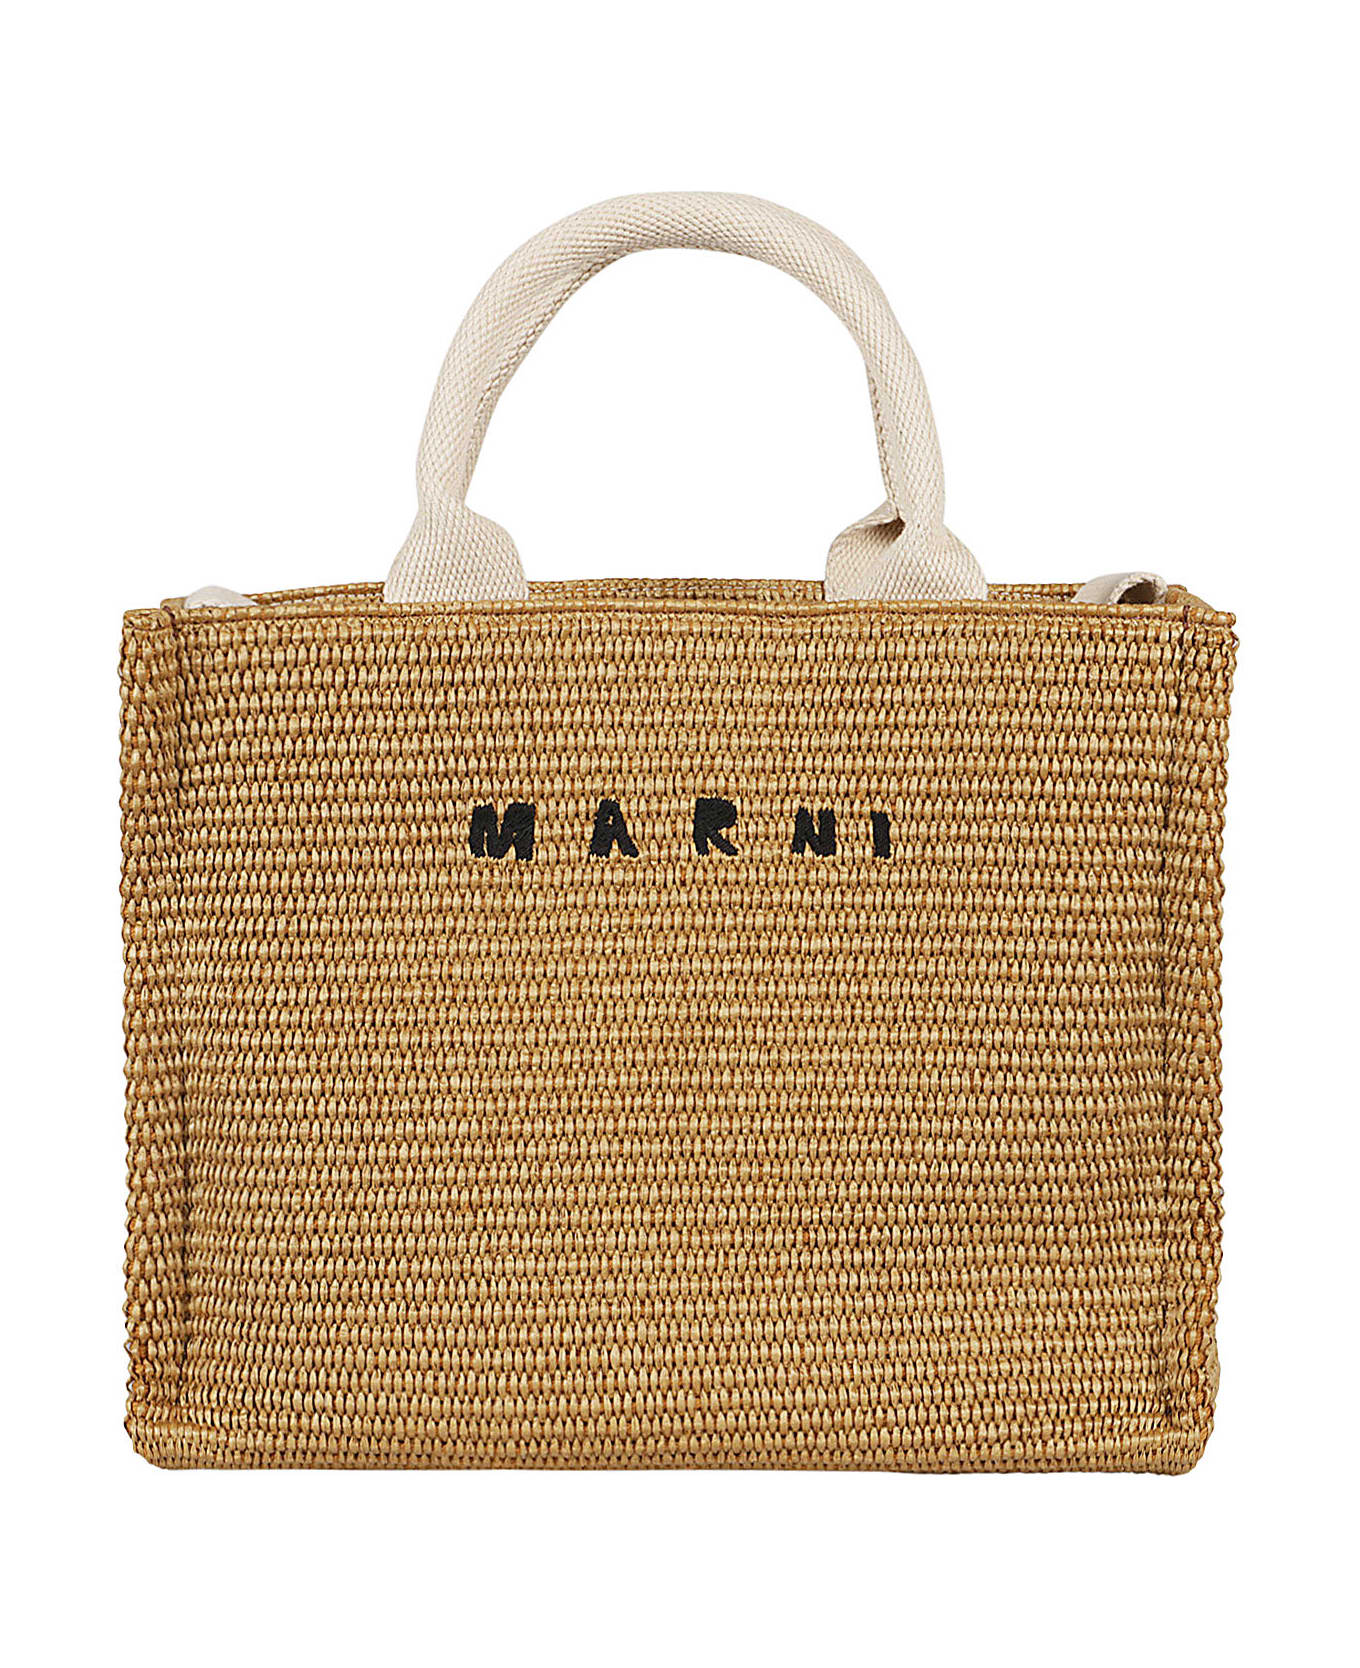 Marni Small Basket - Corda トートバッグ